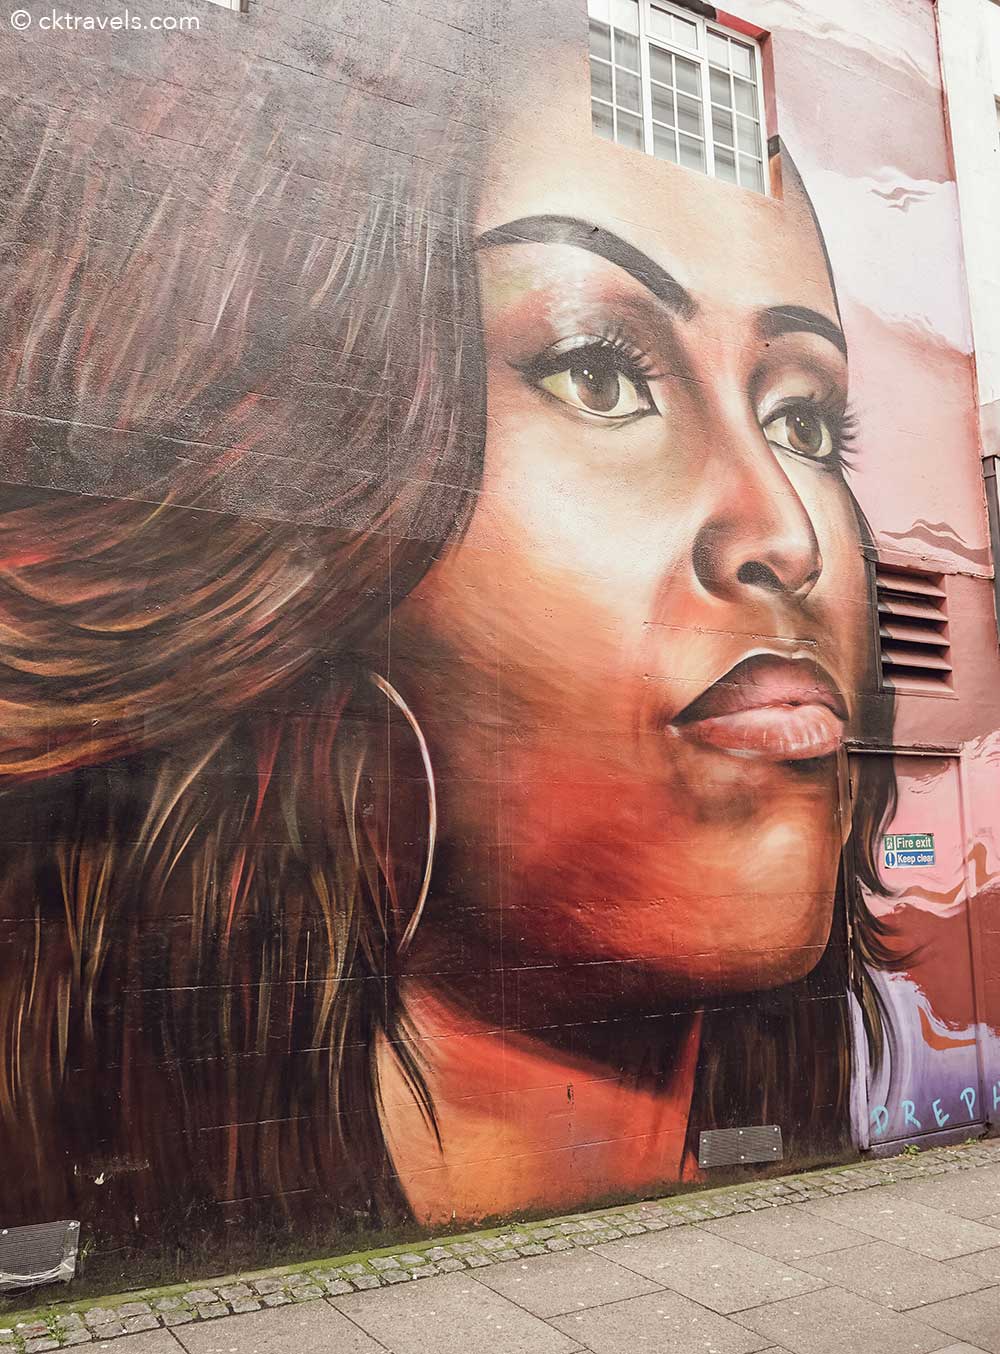 Street art in Brixton